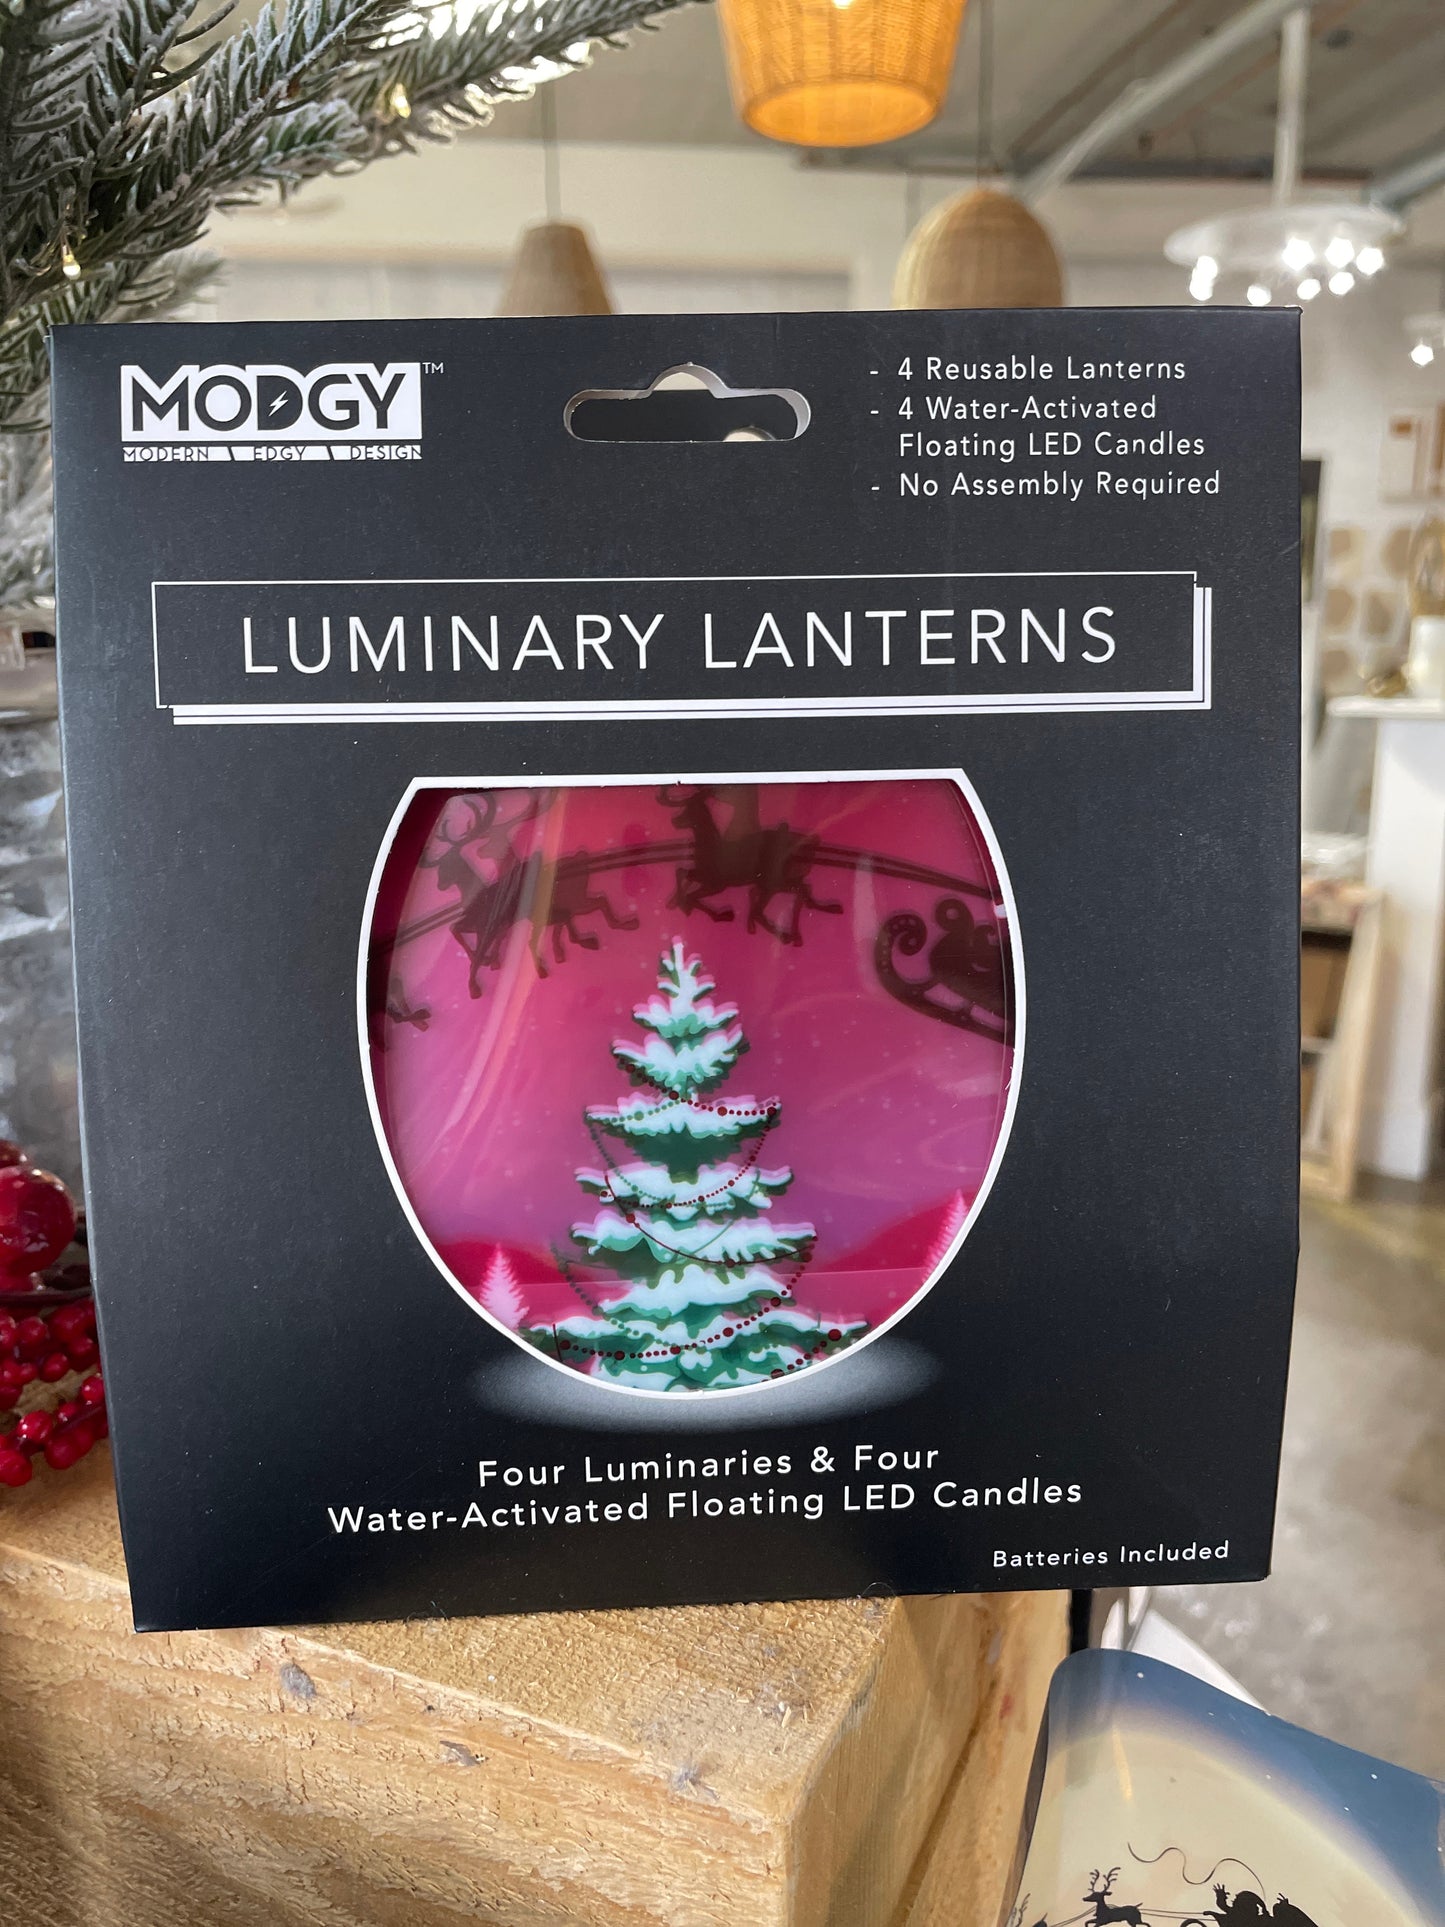 Luminary Lanterns